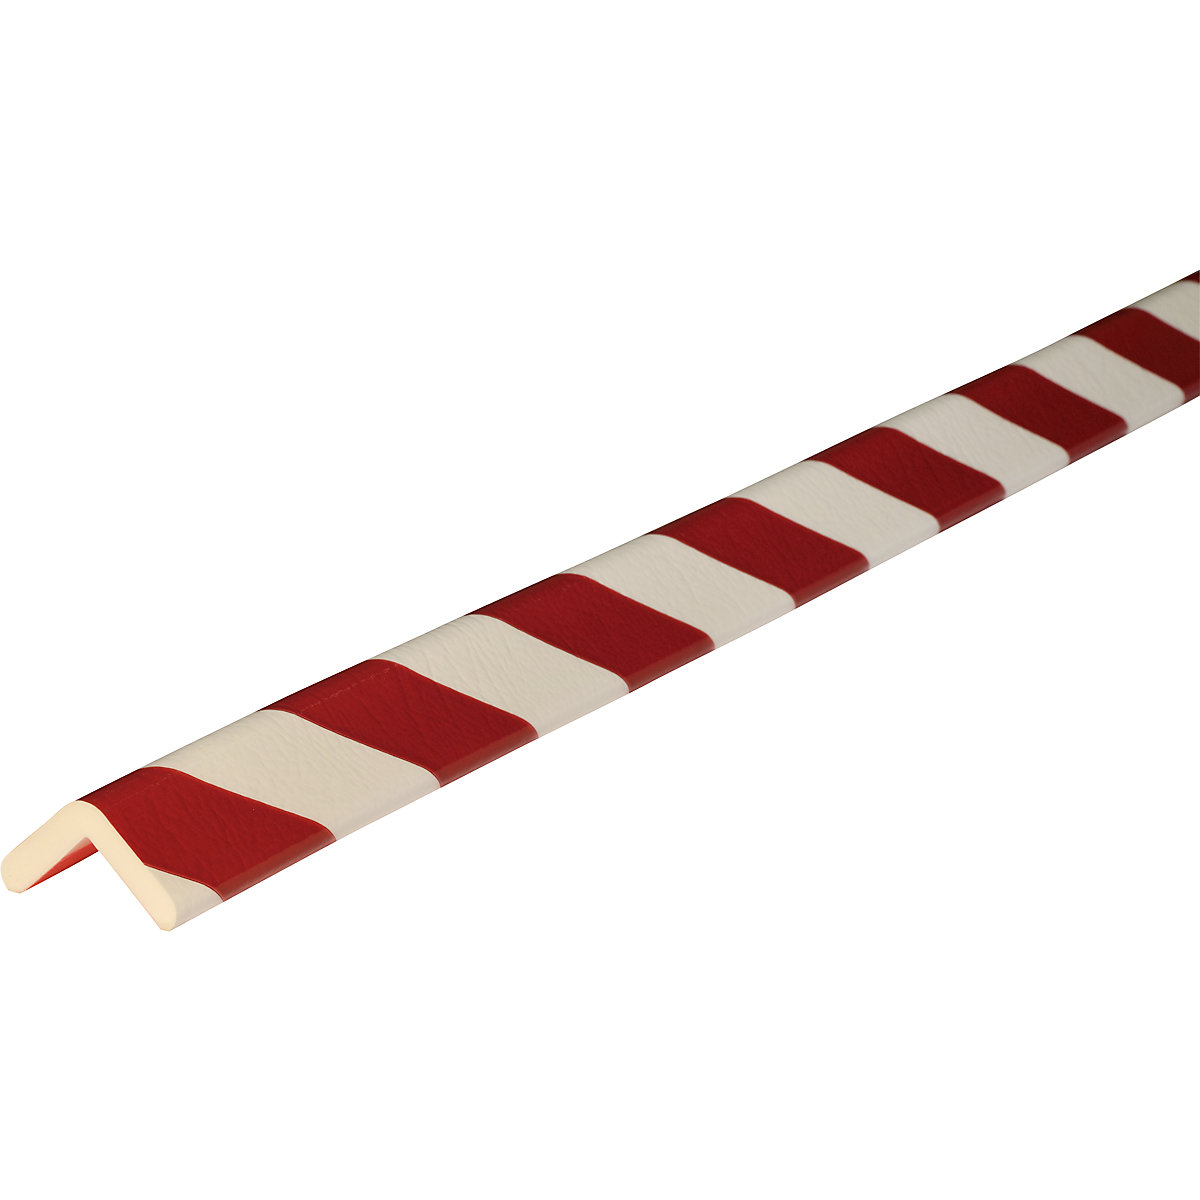 Knuffi®-hoekbescherming – SHG, type H, stuk van 1 m, rood/wit-19